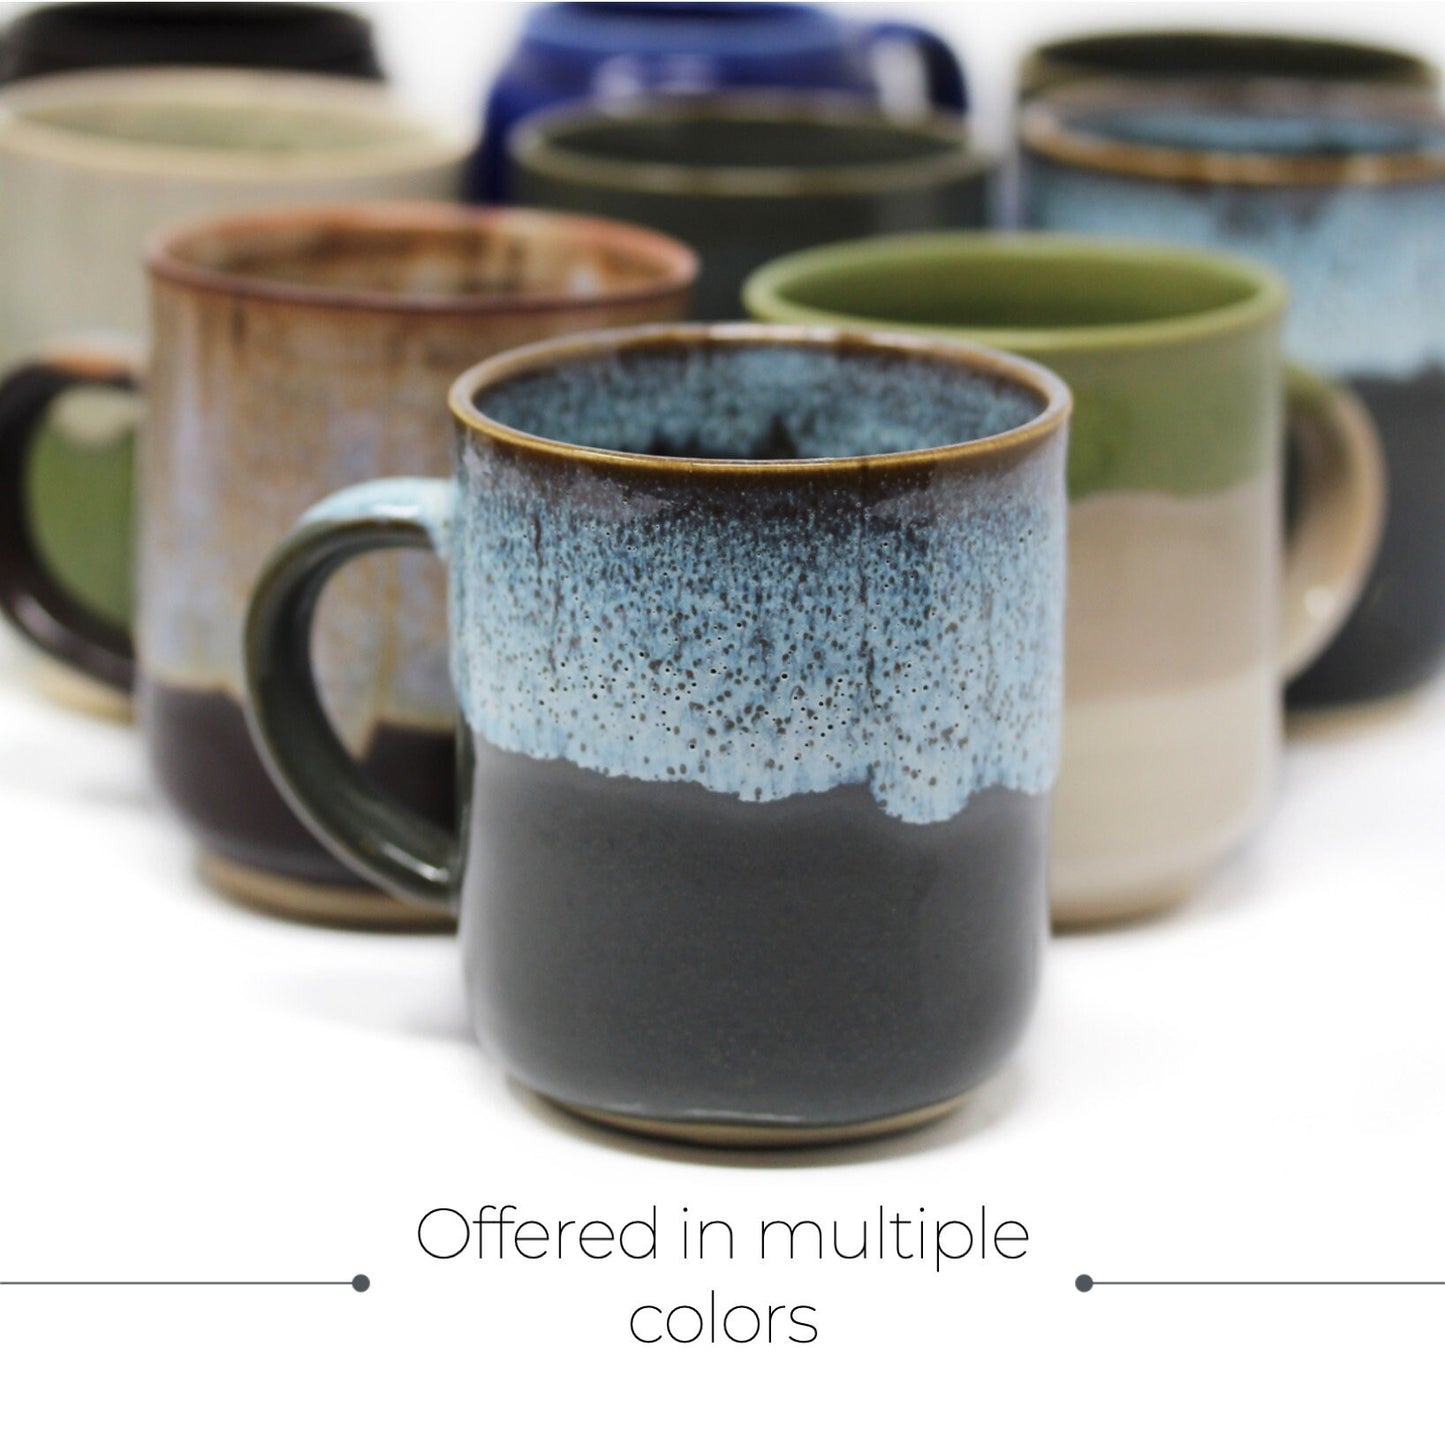 Bright Blue Stoneware Mug With Handle, Stoneware Coffee Mug, Pottery Mug Handmade, Handmade Pottery Mug.Modern Mug, Stoneware Tea Mug